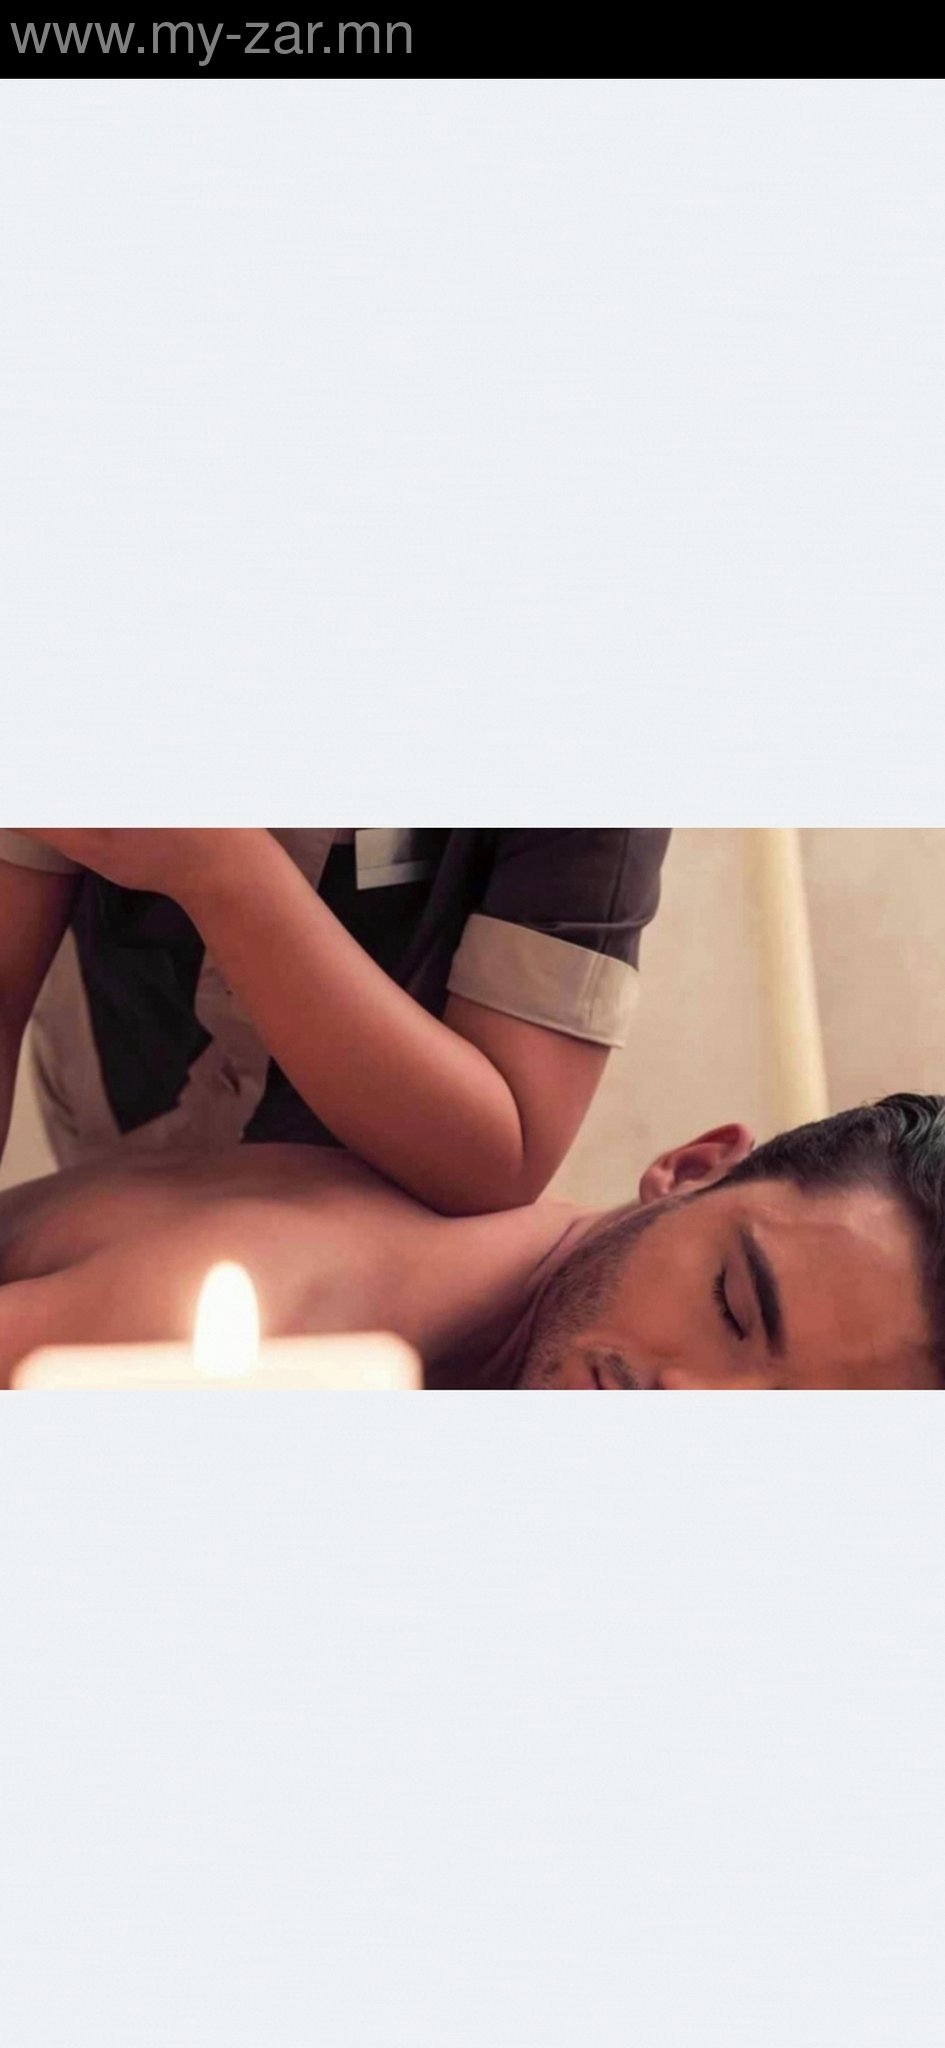 Халуухан массаж HOT massage bie ugaalga bvh turliin aljaal tailah massage bagtsuud taniig hvleej bn 